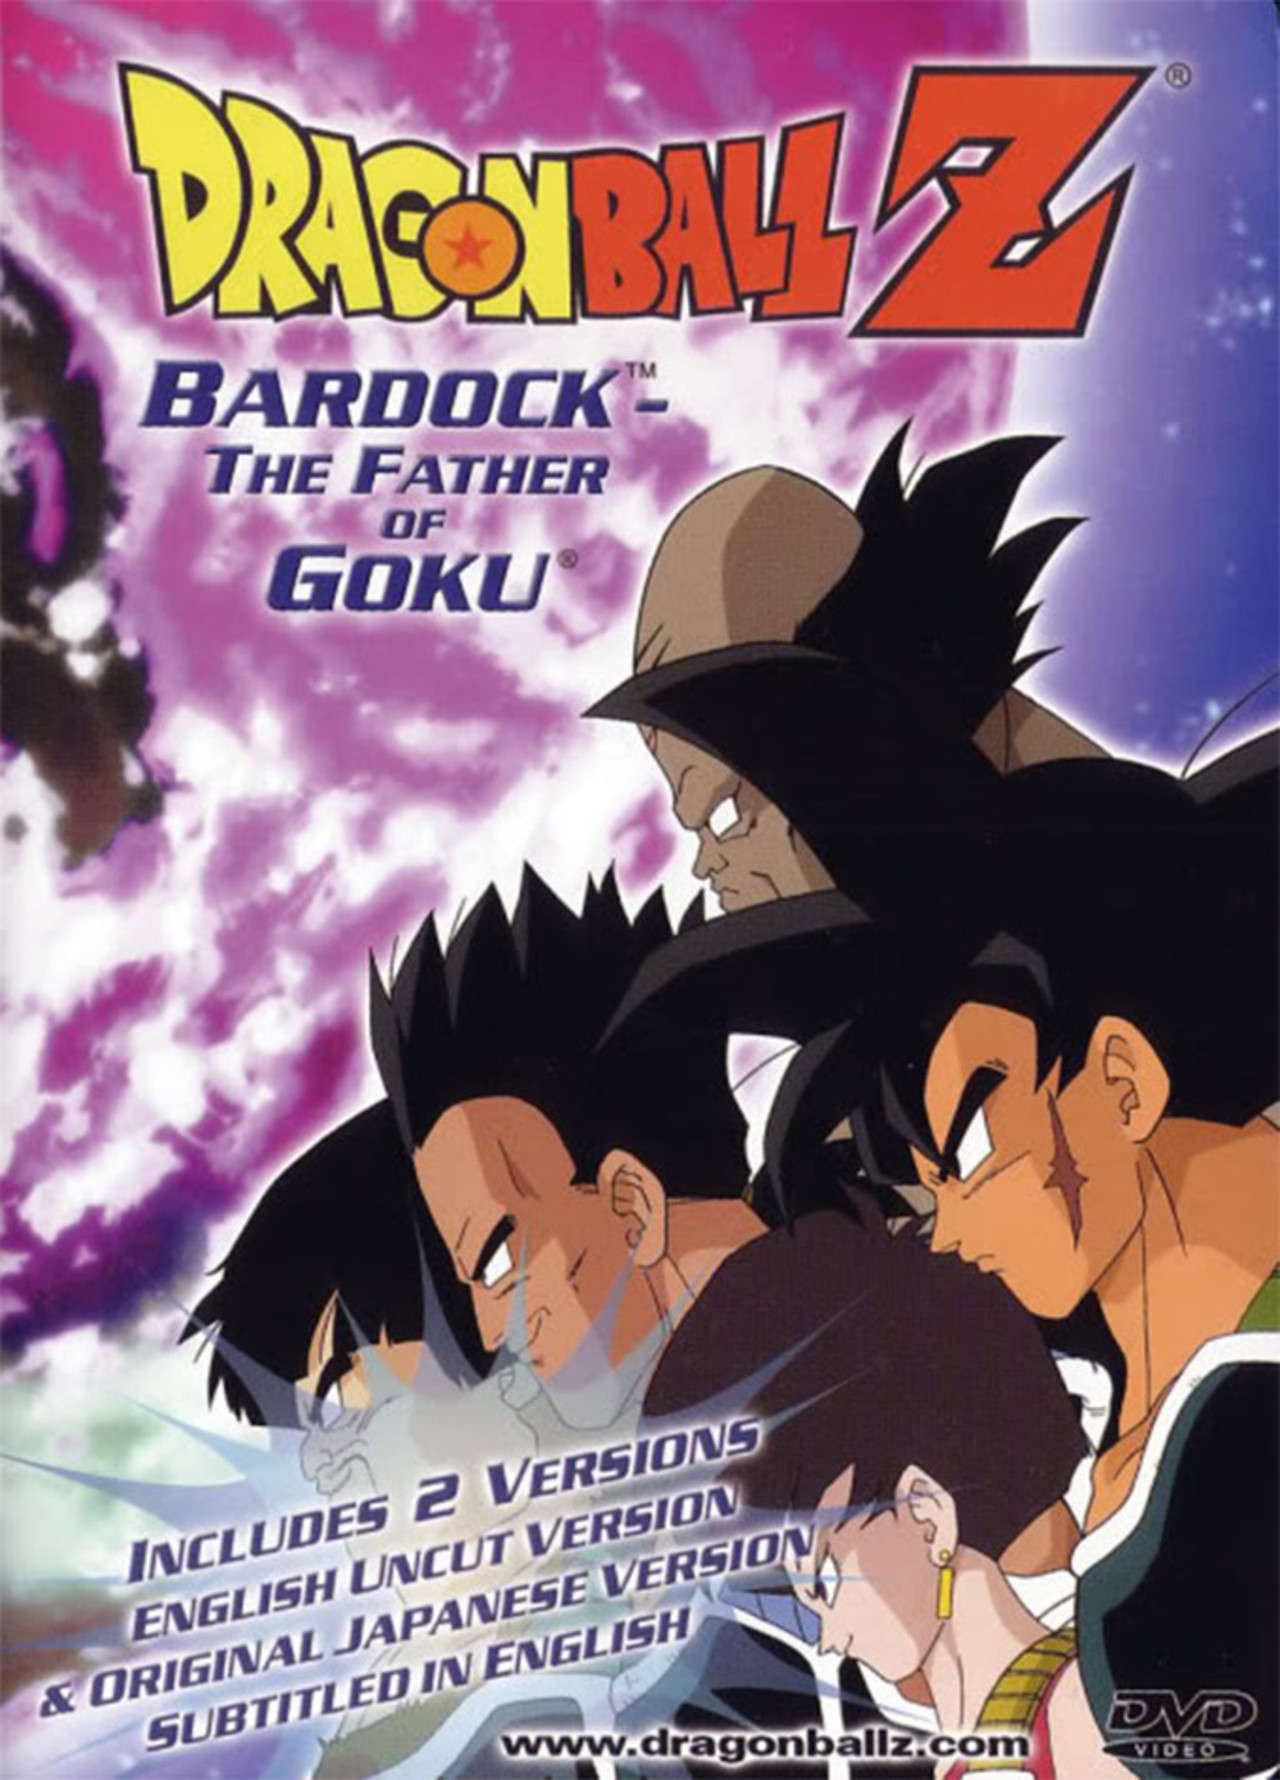 Dragon Ball Bardock The Father of Goku vietsub-Bố của Goku Vietsub